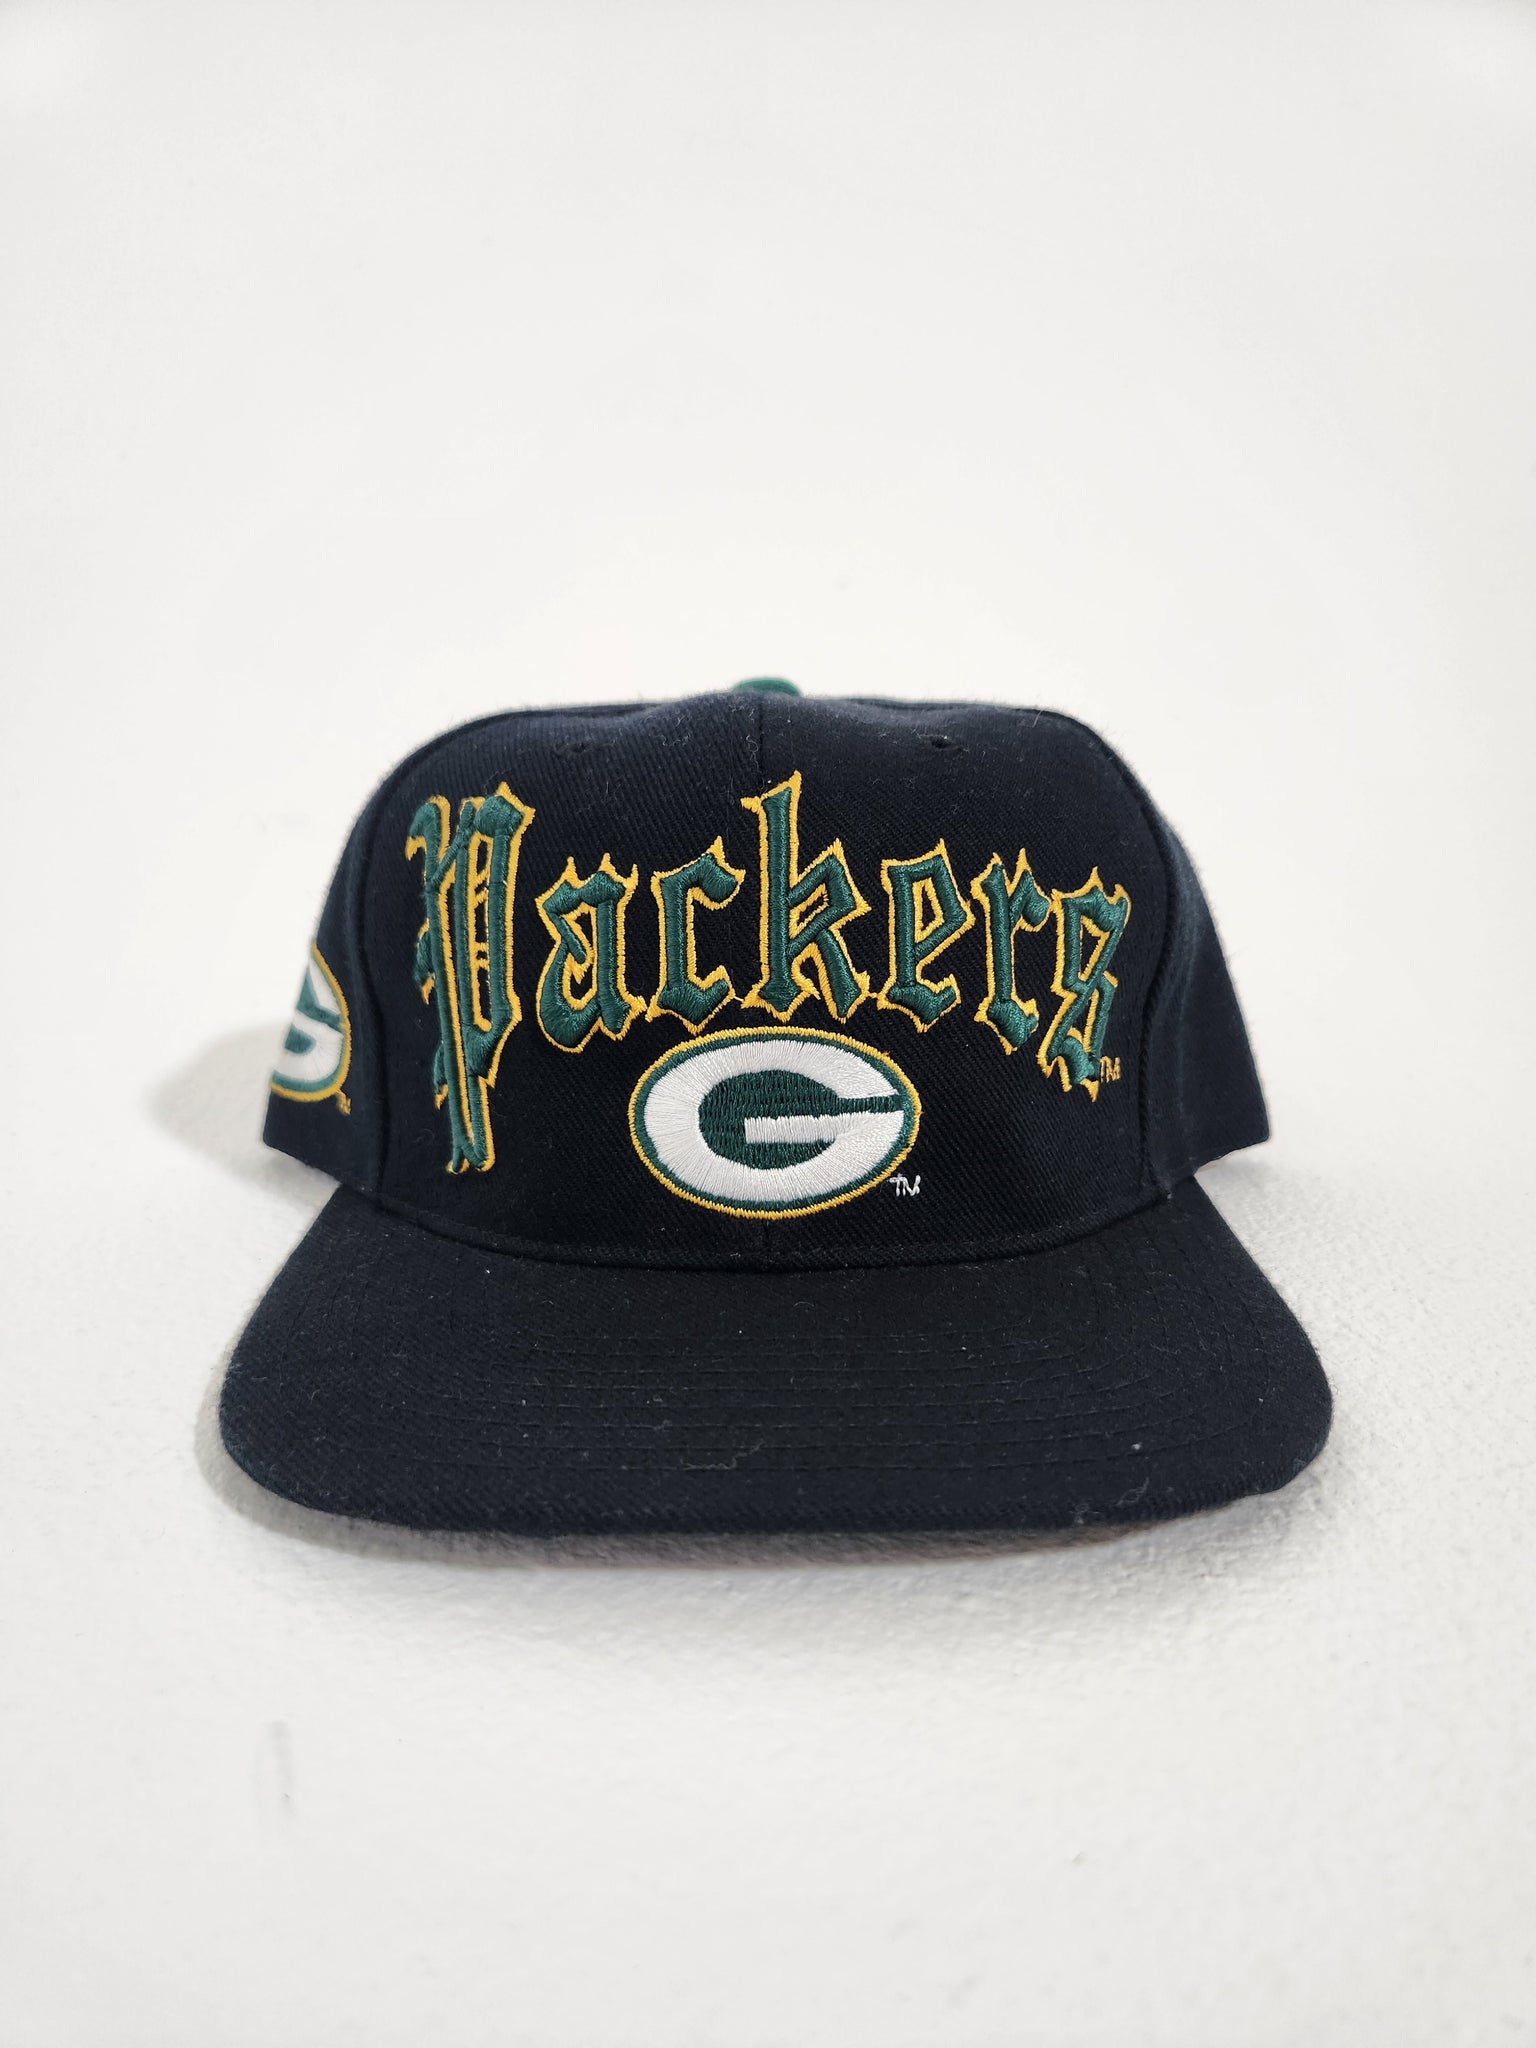 GREEN BAY PACKERS VINTAGE 2000'S NFL STRAPBACK ADULT HAT - Bucks